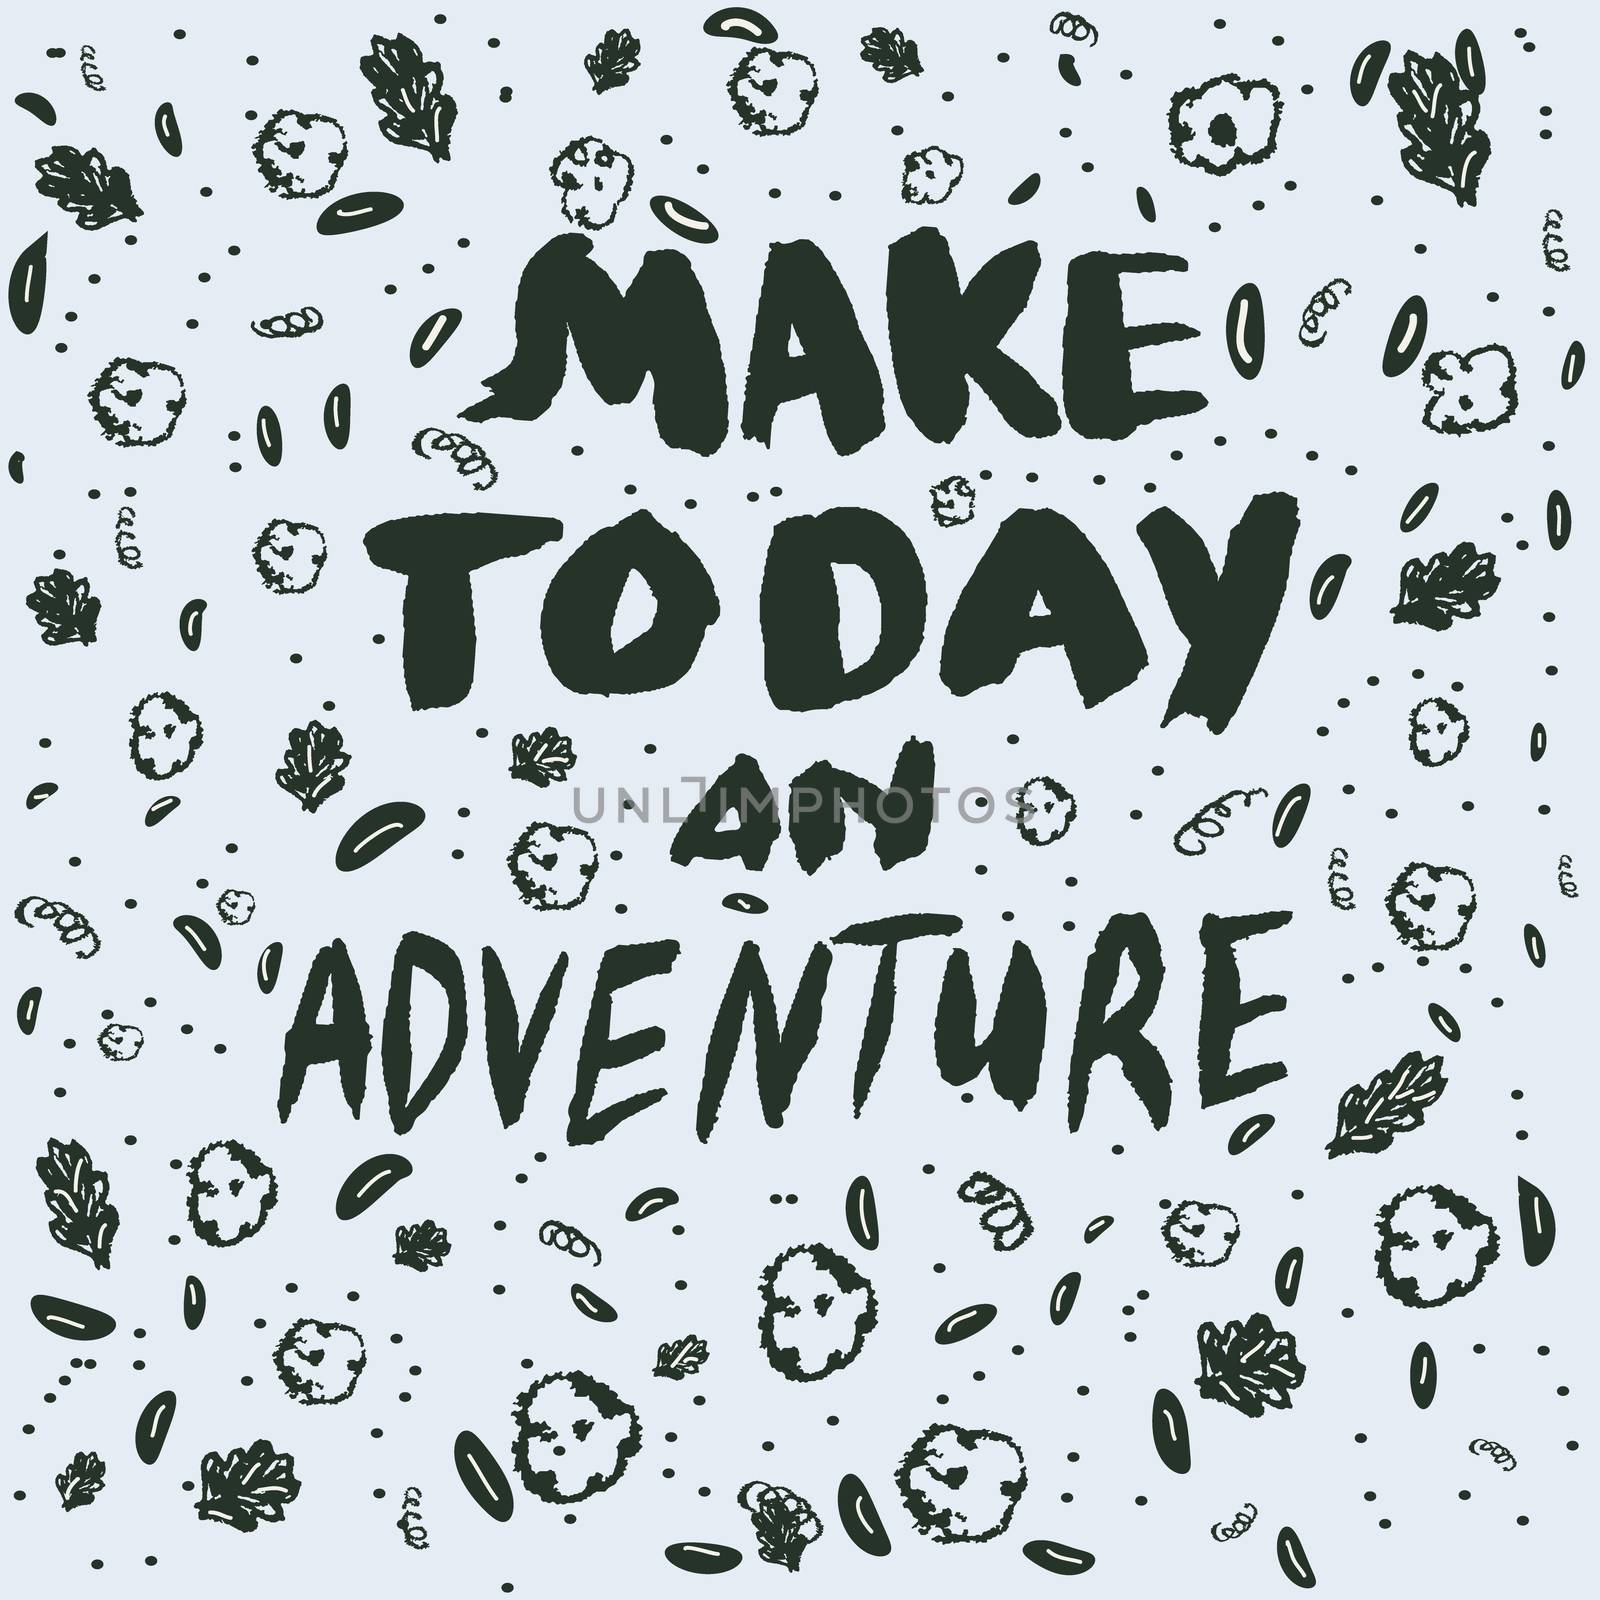 Make today a special day, make an adventure. by Nata_Prando